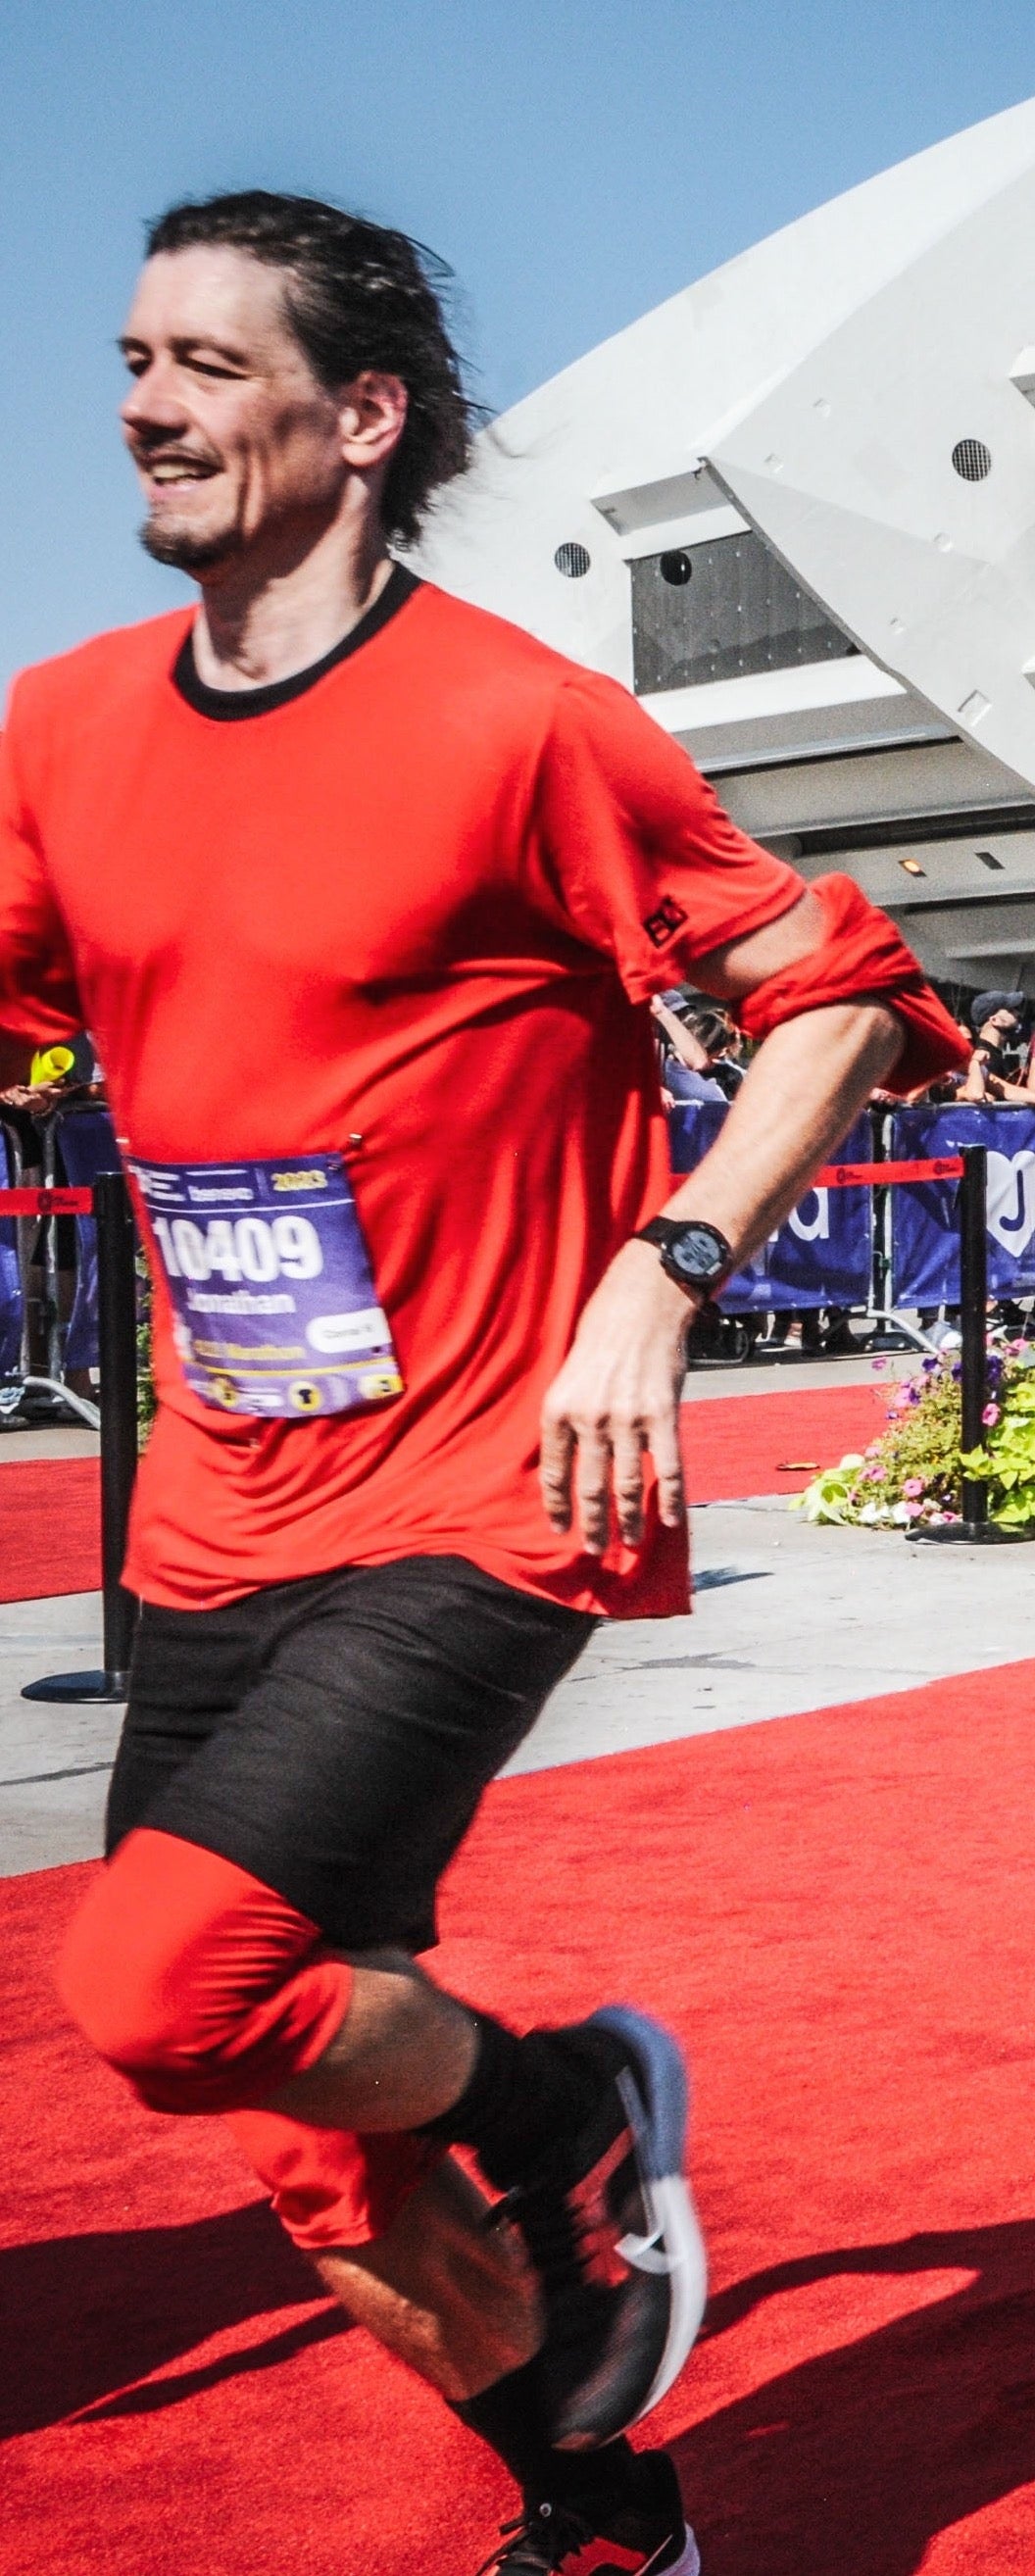 Jonathan Brunelle runs on the red carpet of the finish line of the beneva montreal marathon.